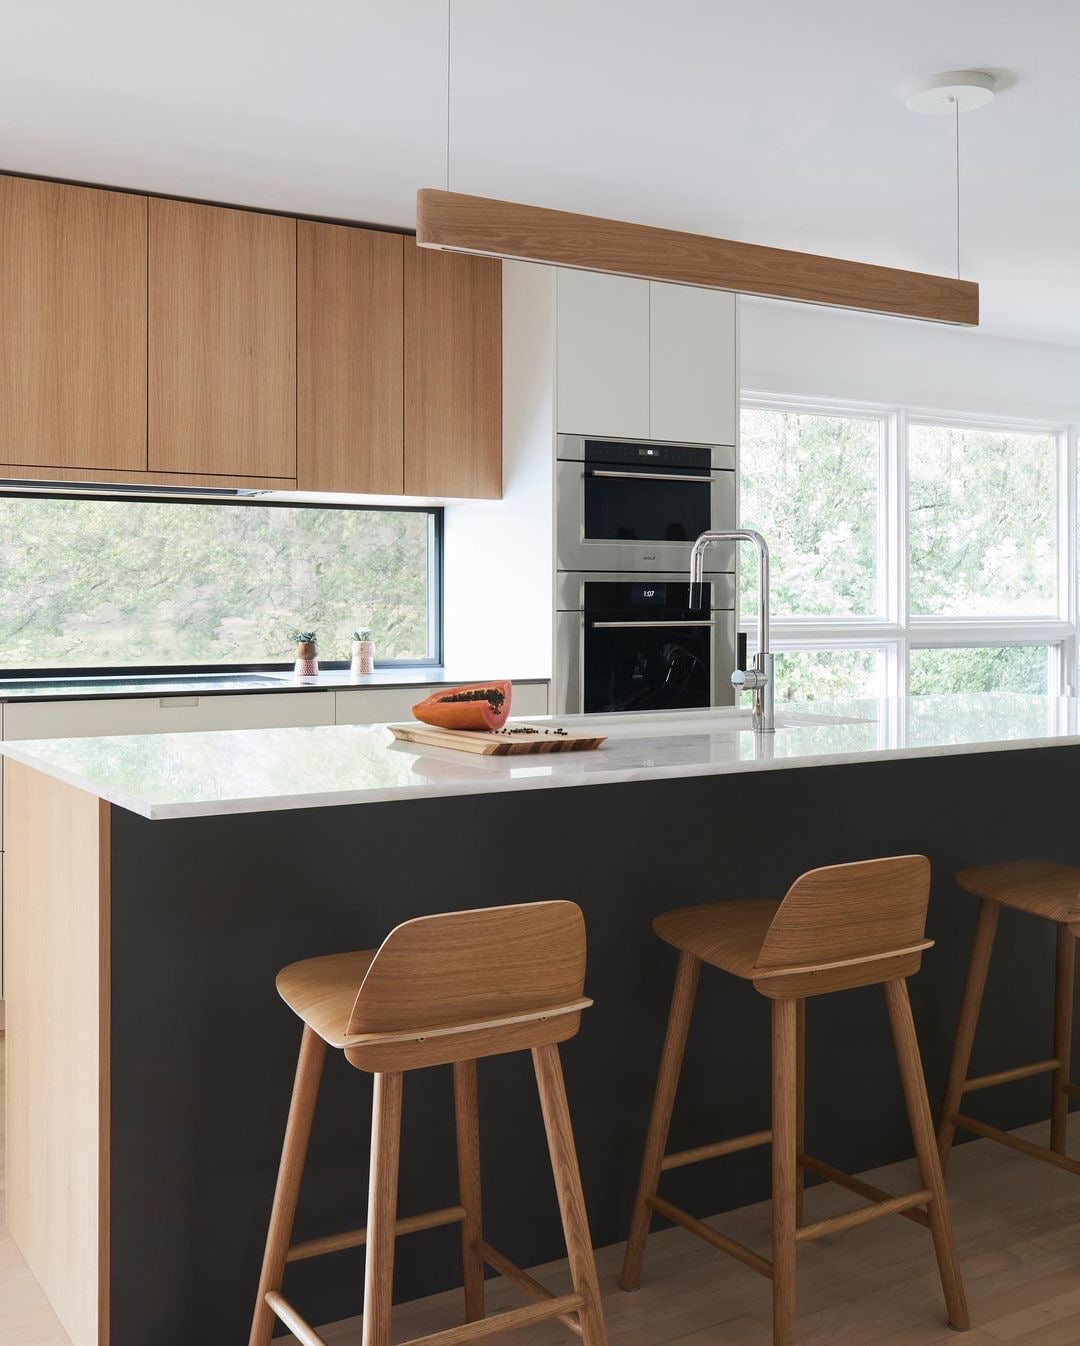 Kitchen window backsplash sits above white countertops and below modern wood cabinets.